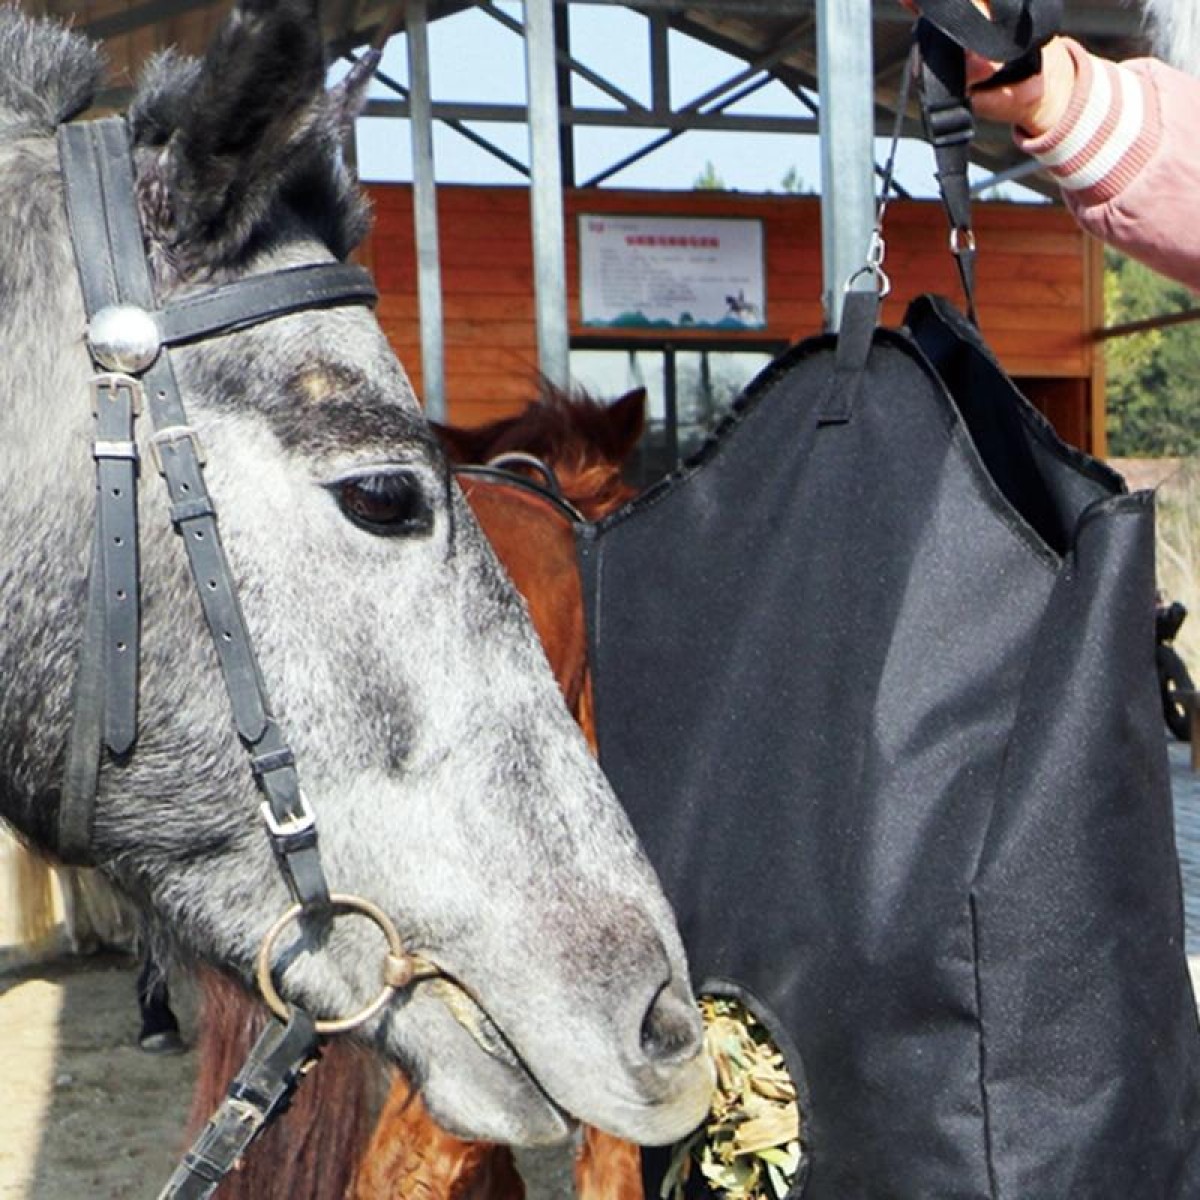 2 PCS Hay Bag Feeding Horse Bag Stable Large Bag Convenient Horse Straw Bag